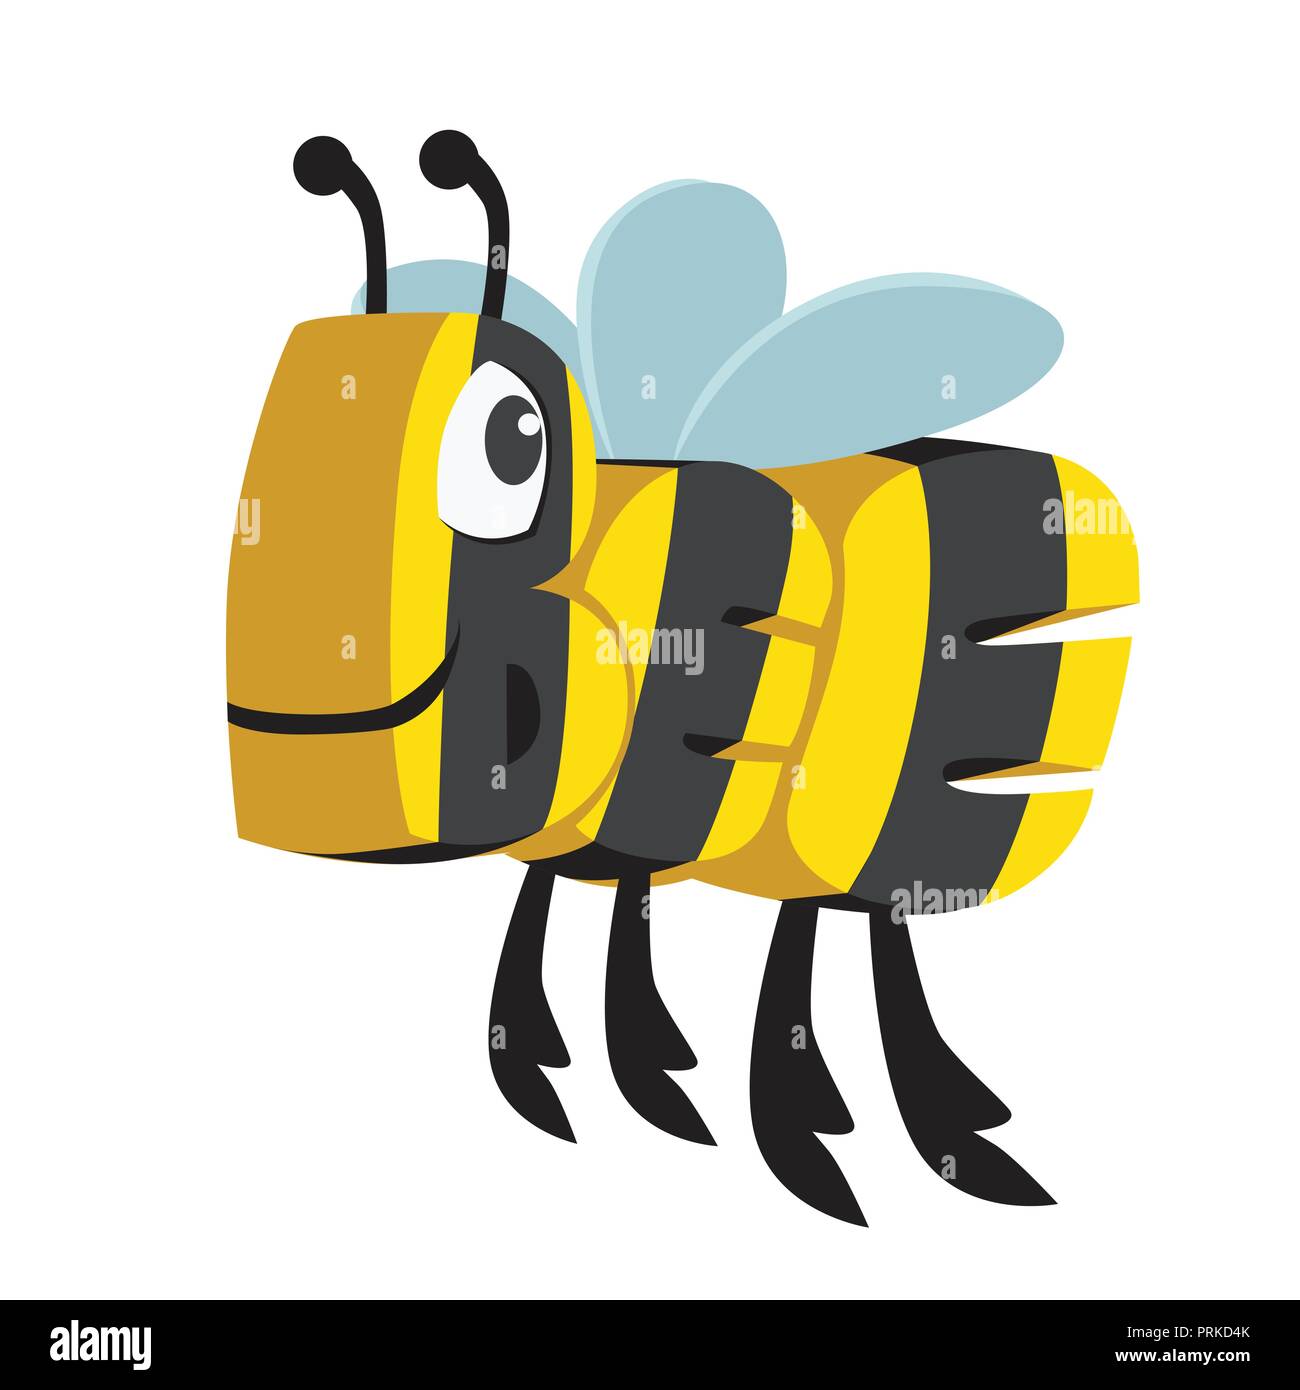 Bee with heart character cartoon Stock Vector